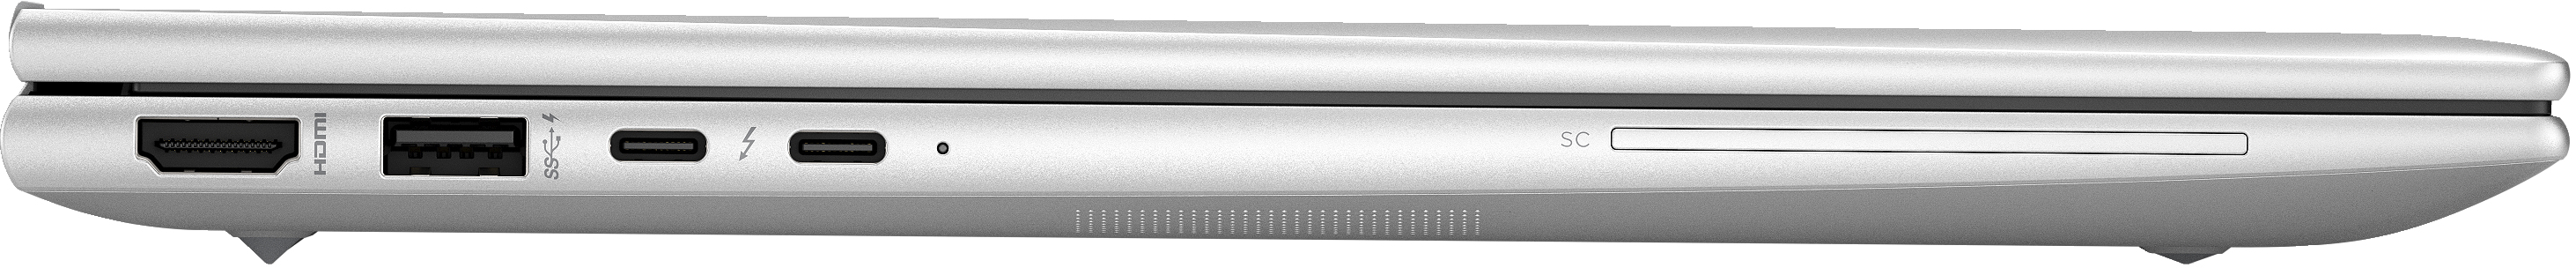 HP EliteBook 840 G9 - 16 GB RAM - 512 GB SSD